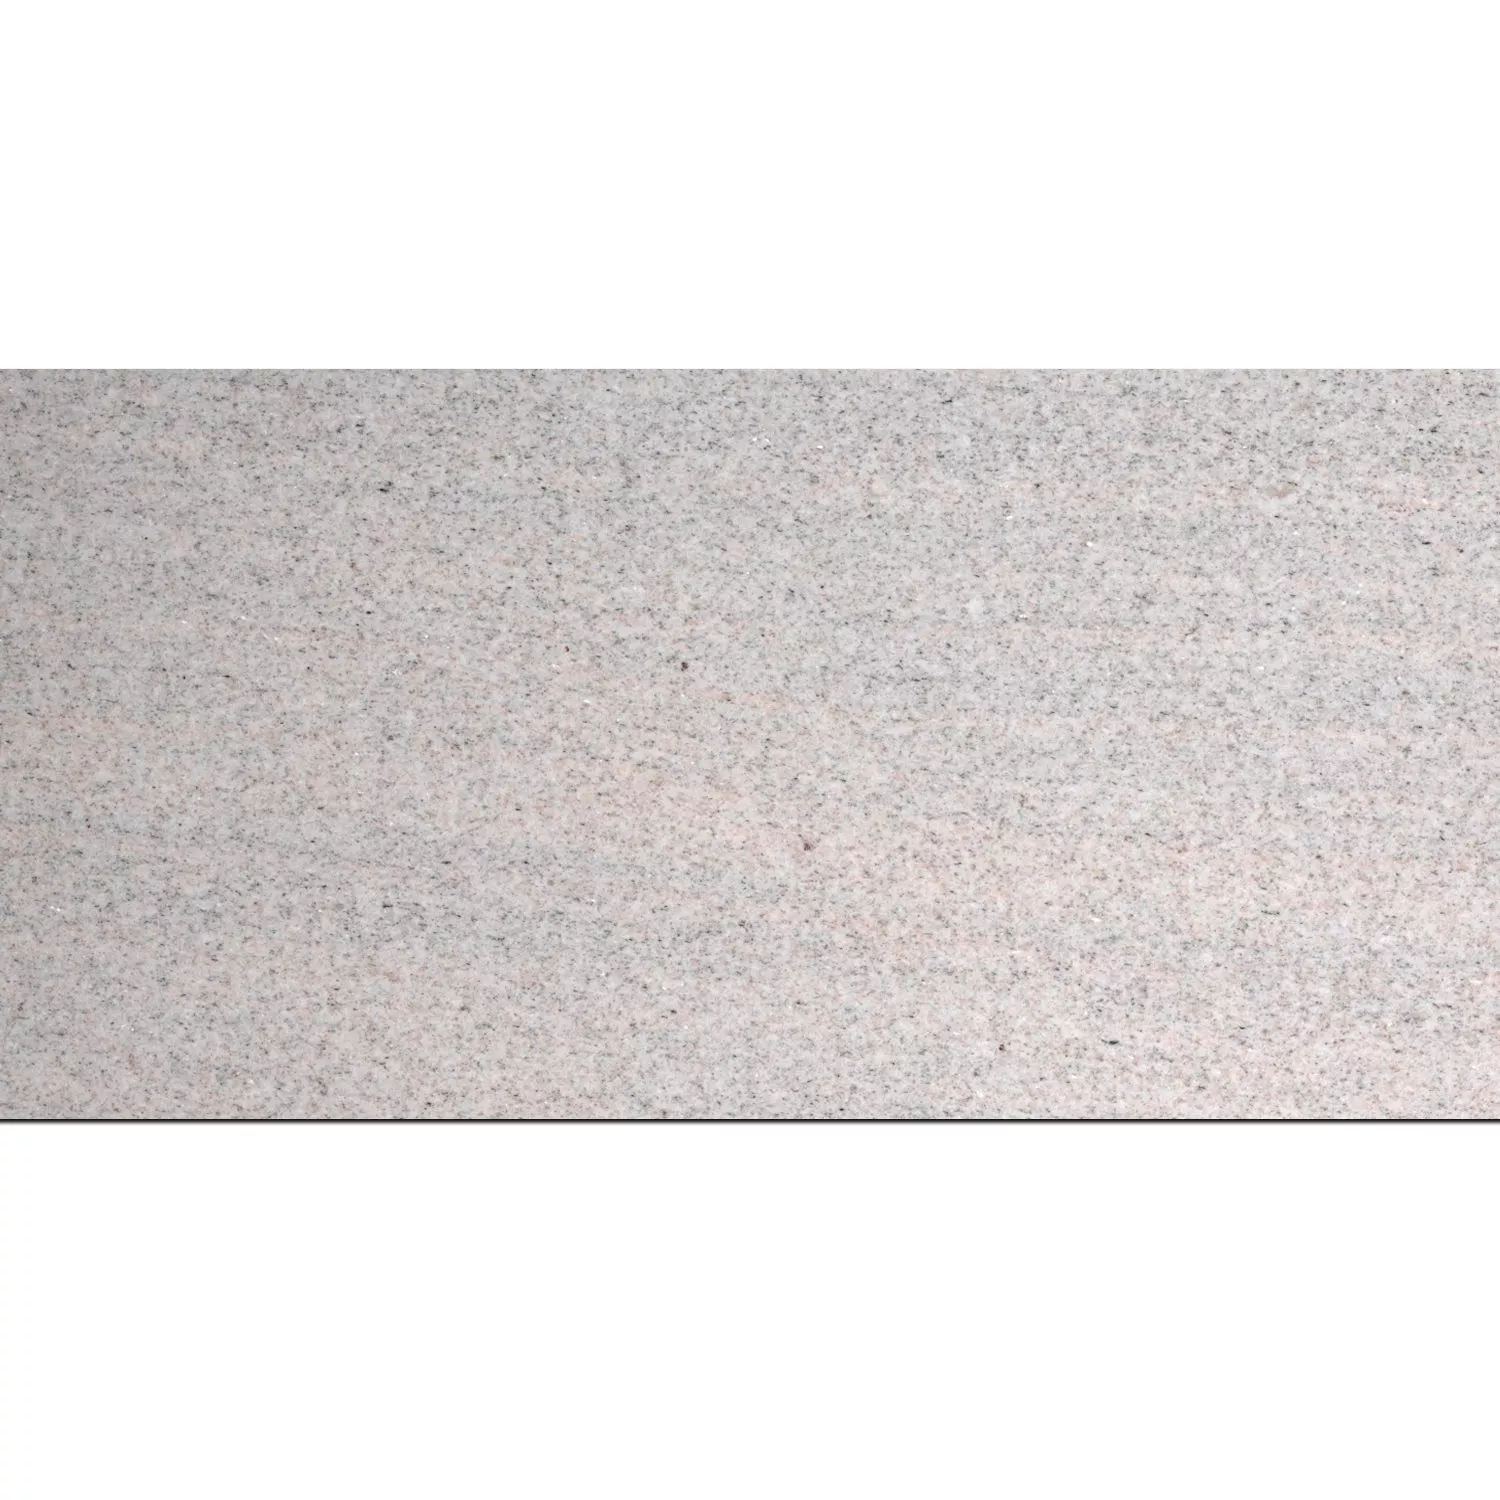 Carreaux Pierre Naturelle Granit Imperial White Poli Brillant 30,5x61cm